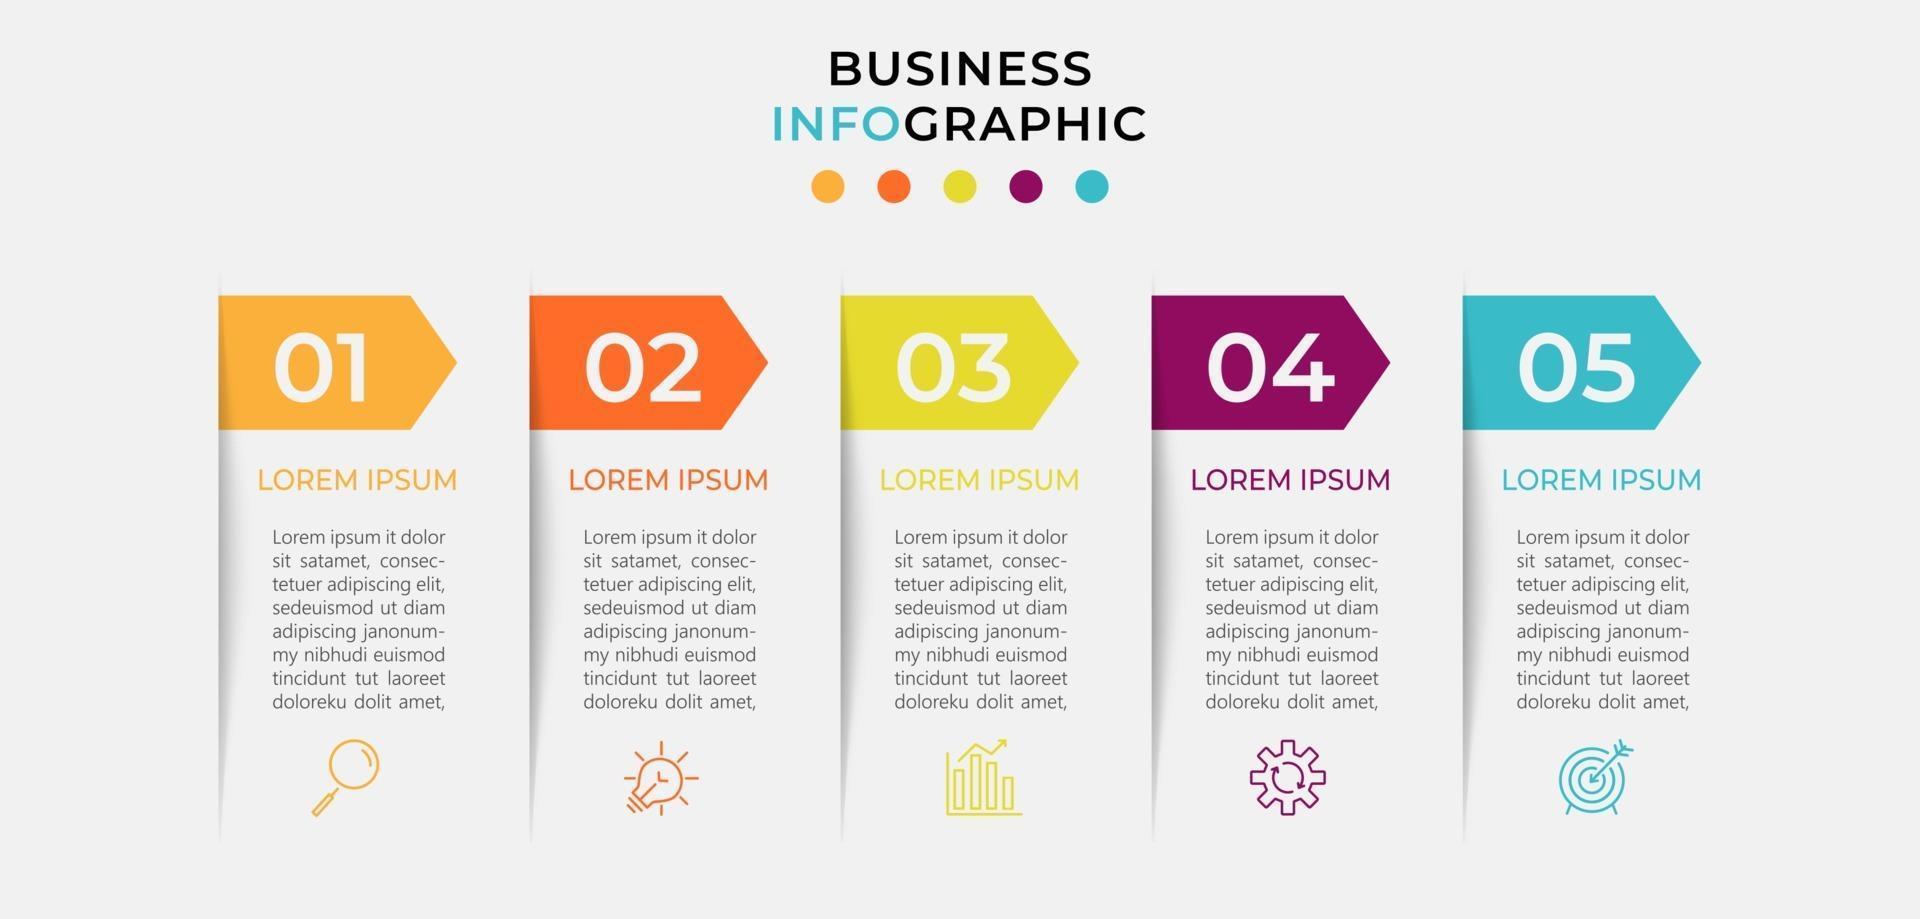 Business infographic design mall vektor med ikoner och 5 fem alternativ eller steg